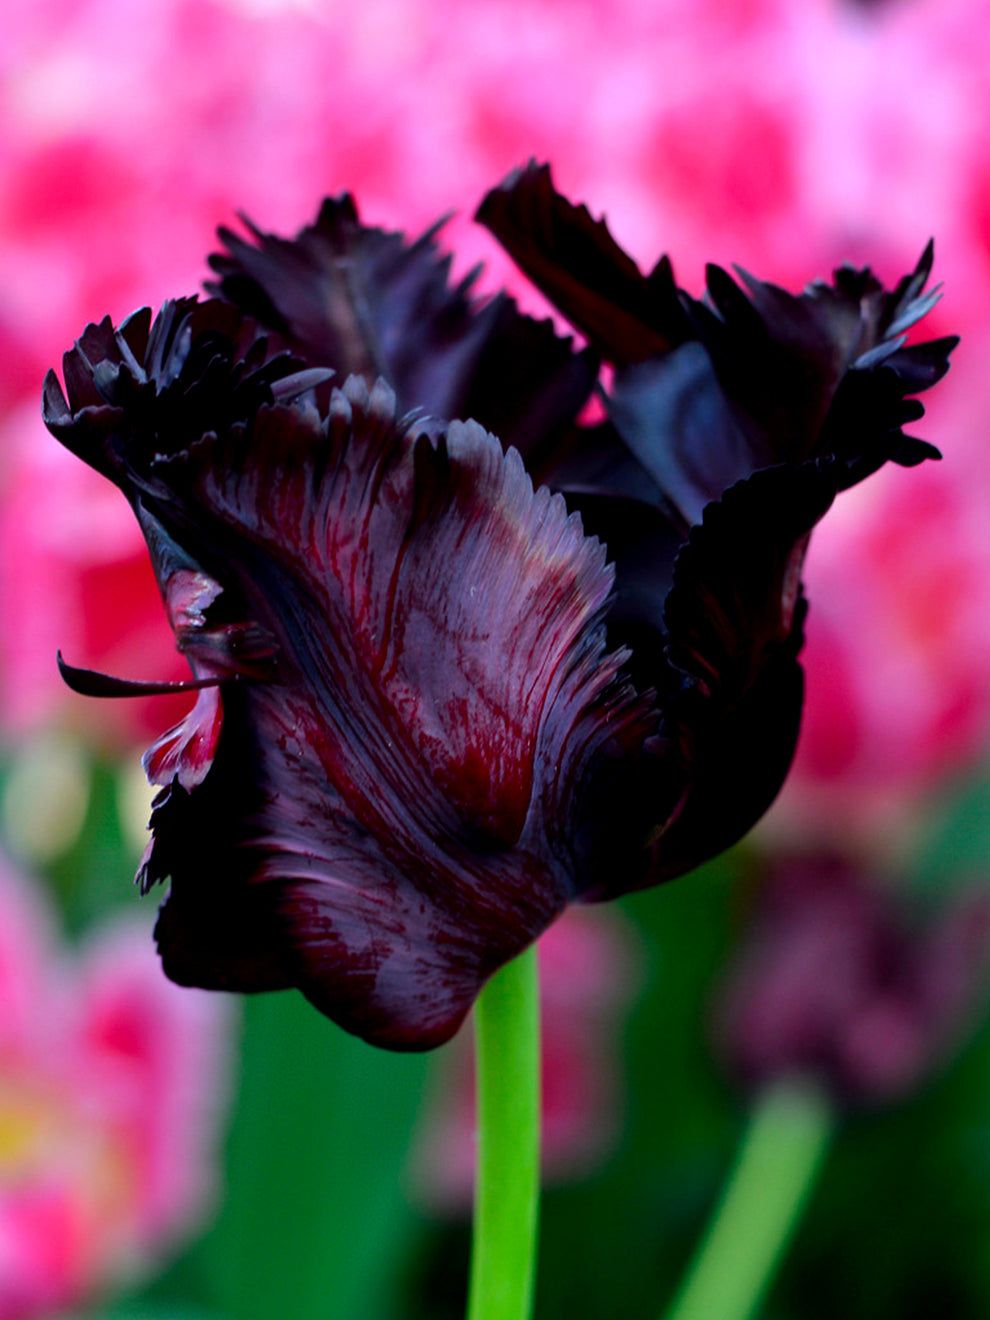 | Brighten Your Garden with Tulips: Shop a wide range of beautiful tulip bulbs | 1Garden.com